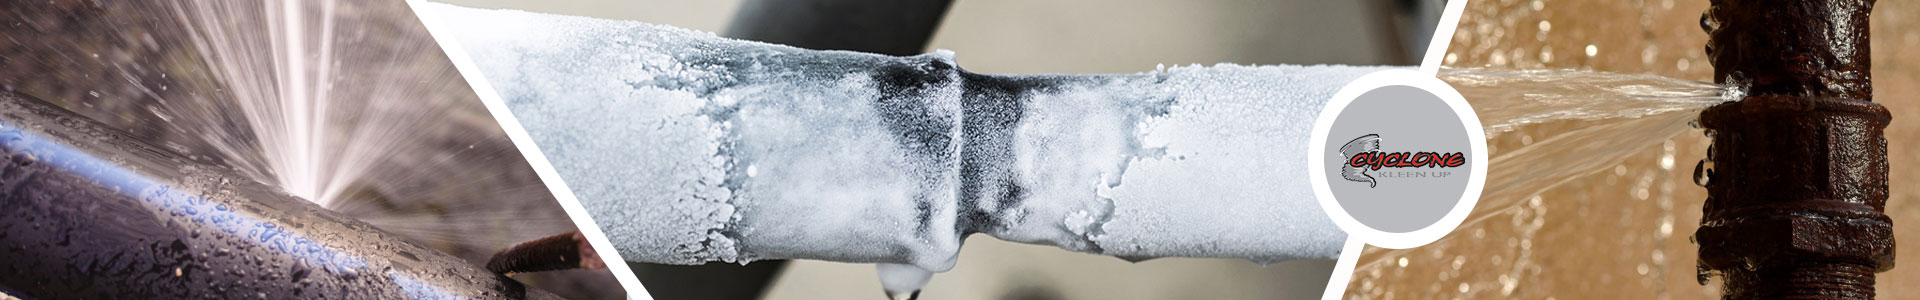 Burst or Frozen Pipe Repair in Colorado Springs, CO | Cyclone